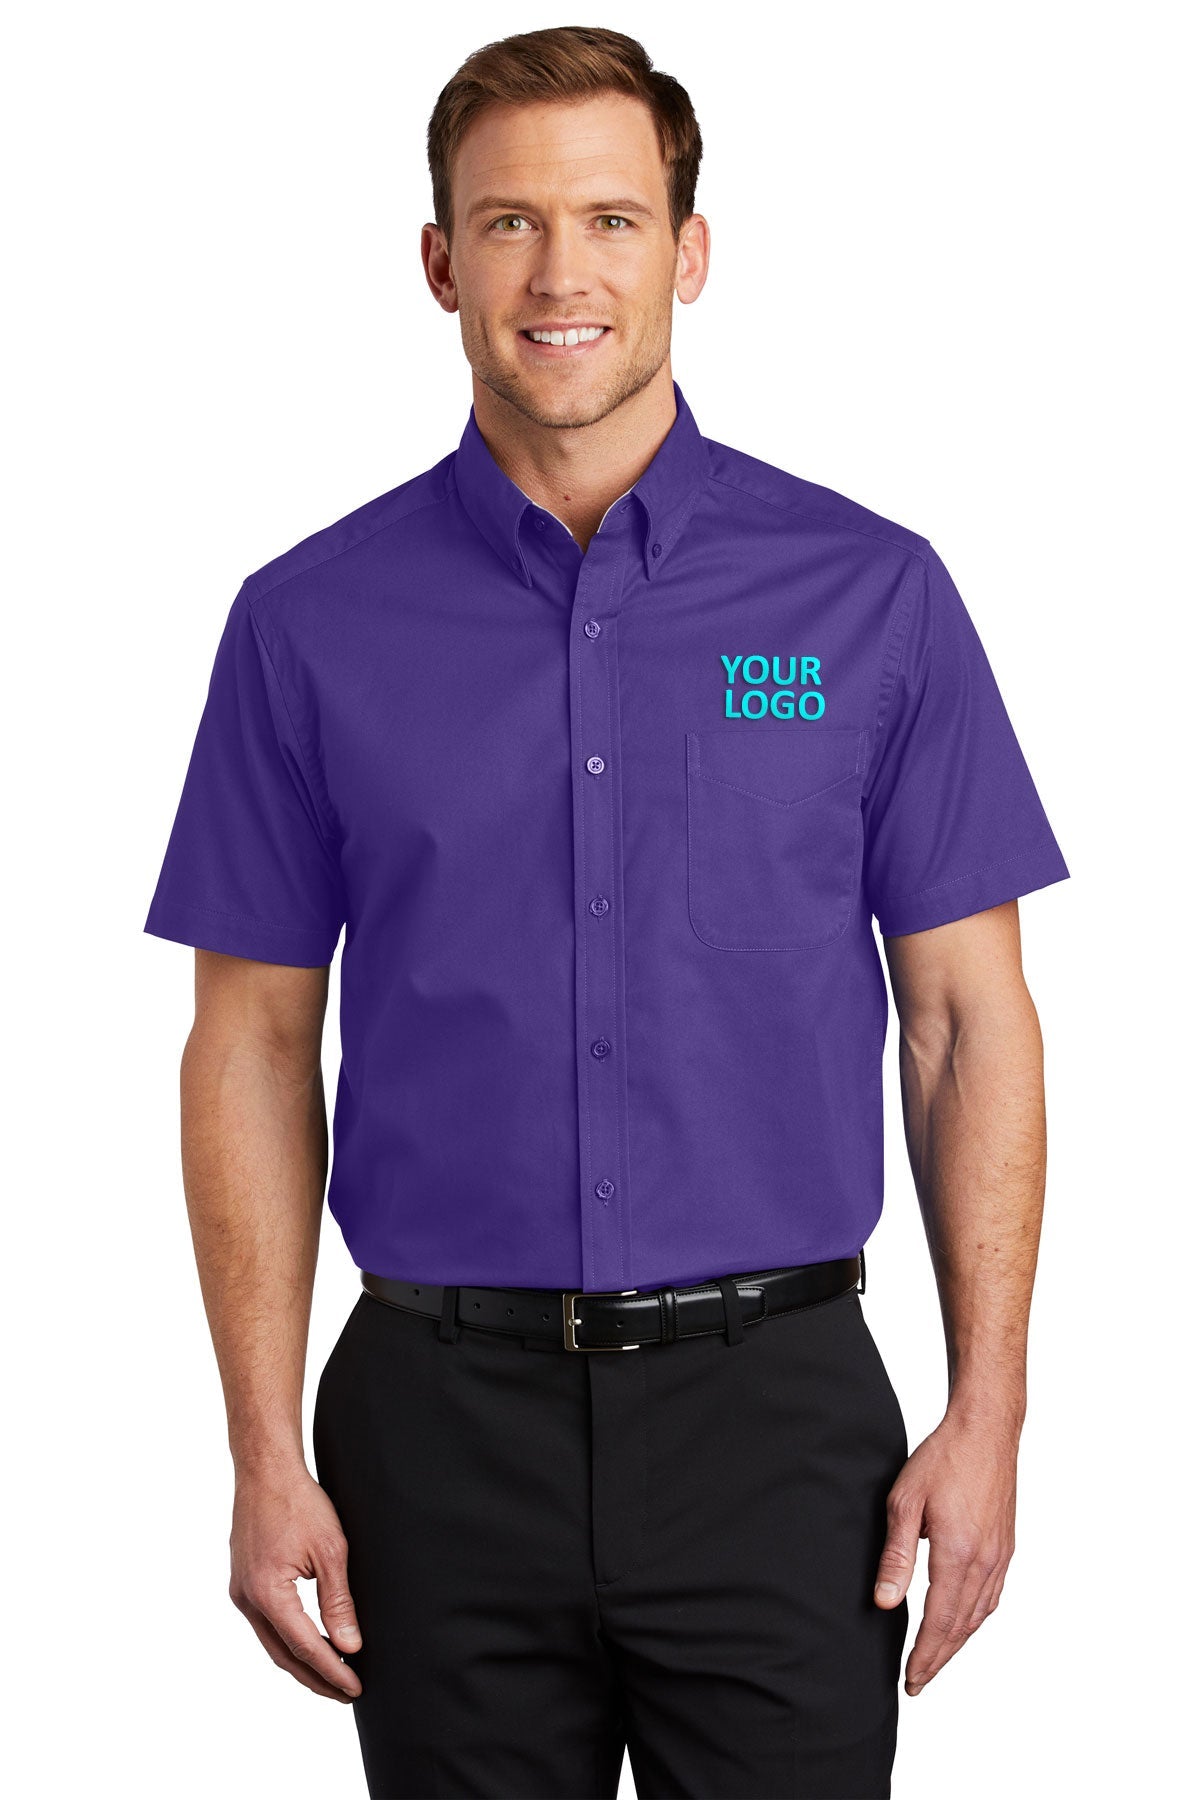 Port Authority Purple/ Light Stone TLS508 company logo shirts